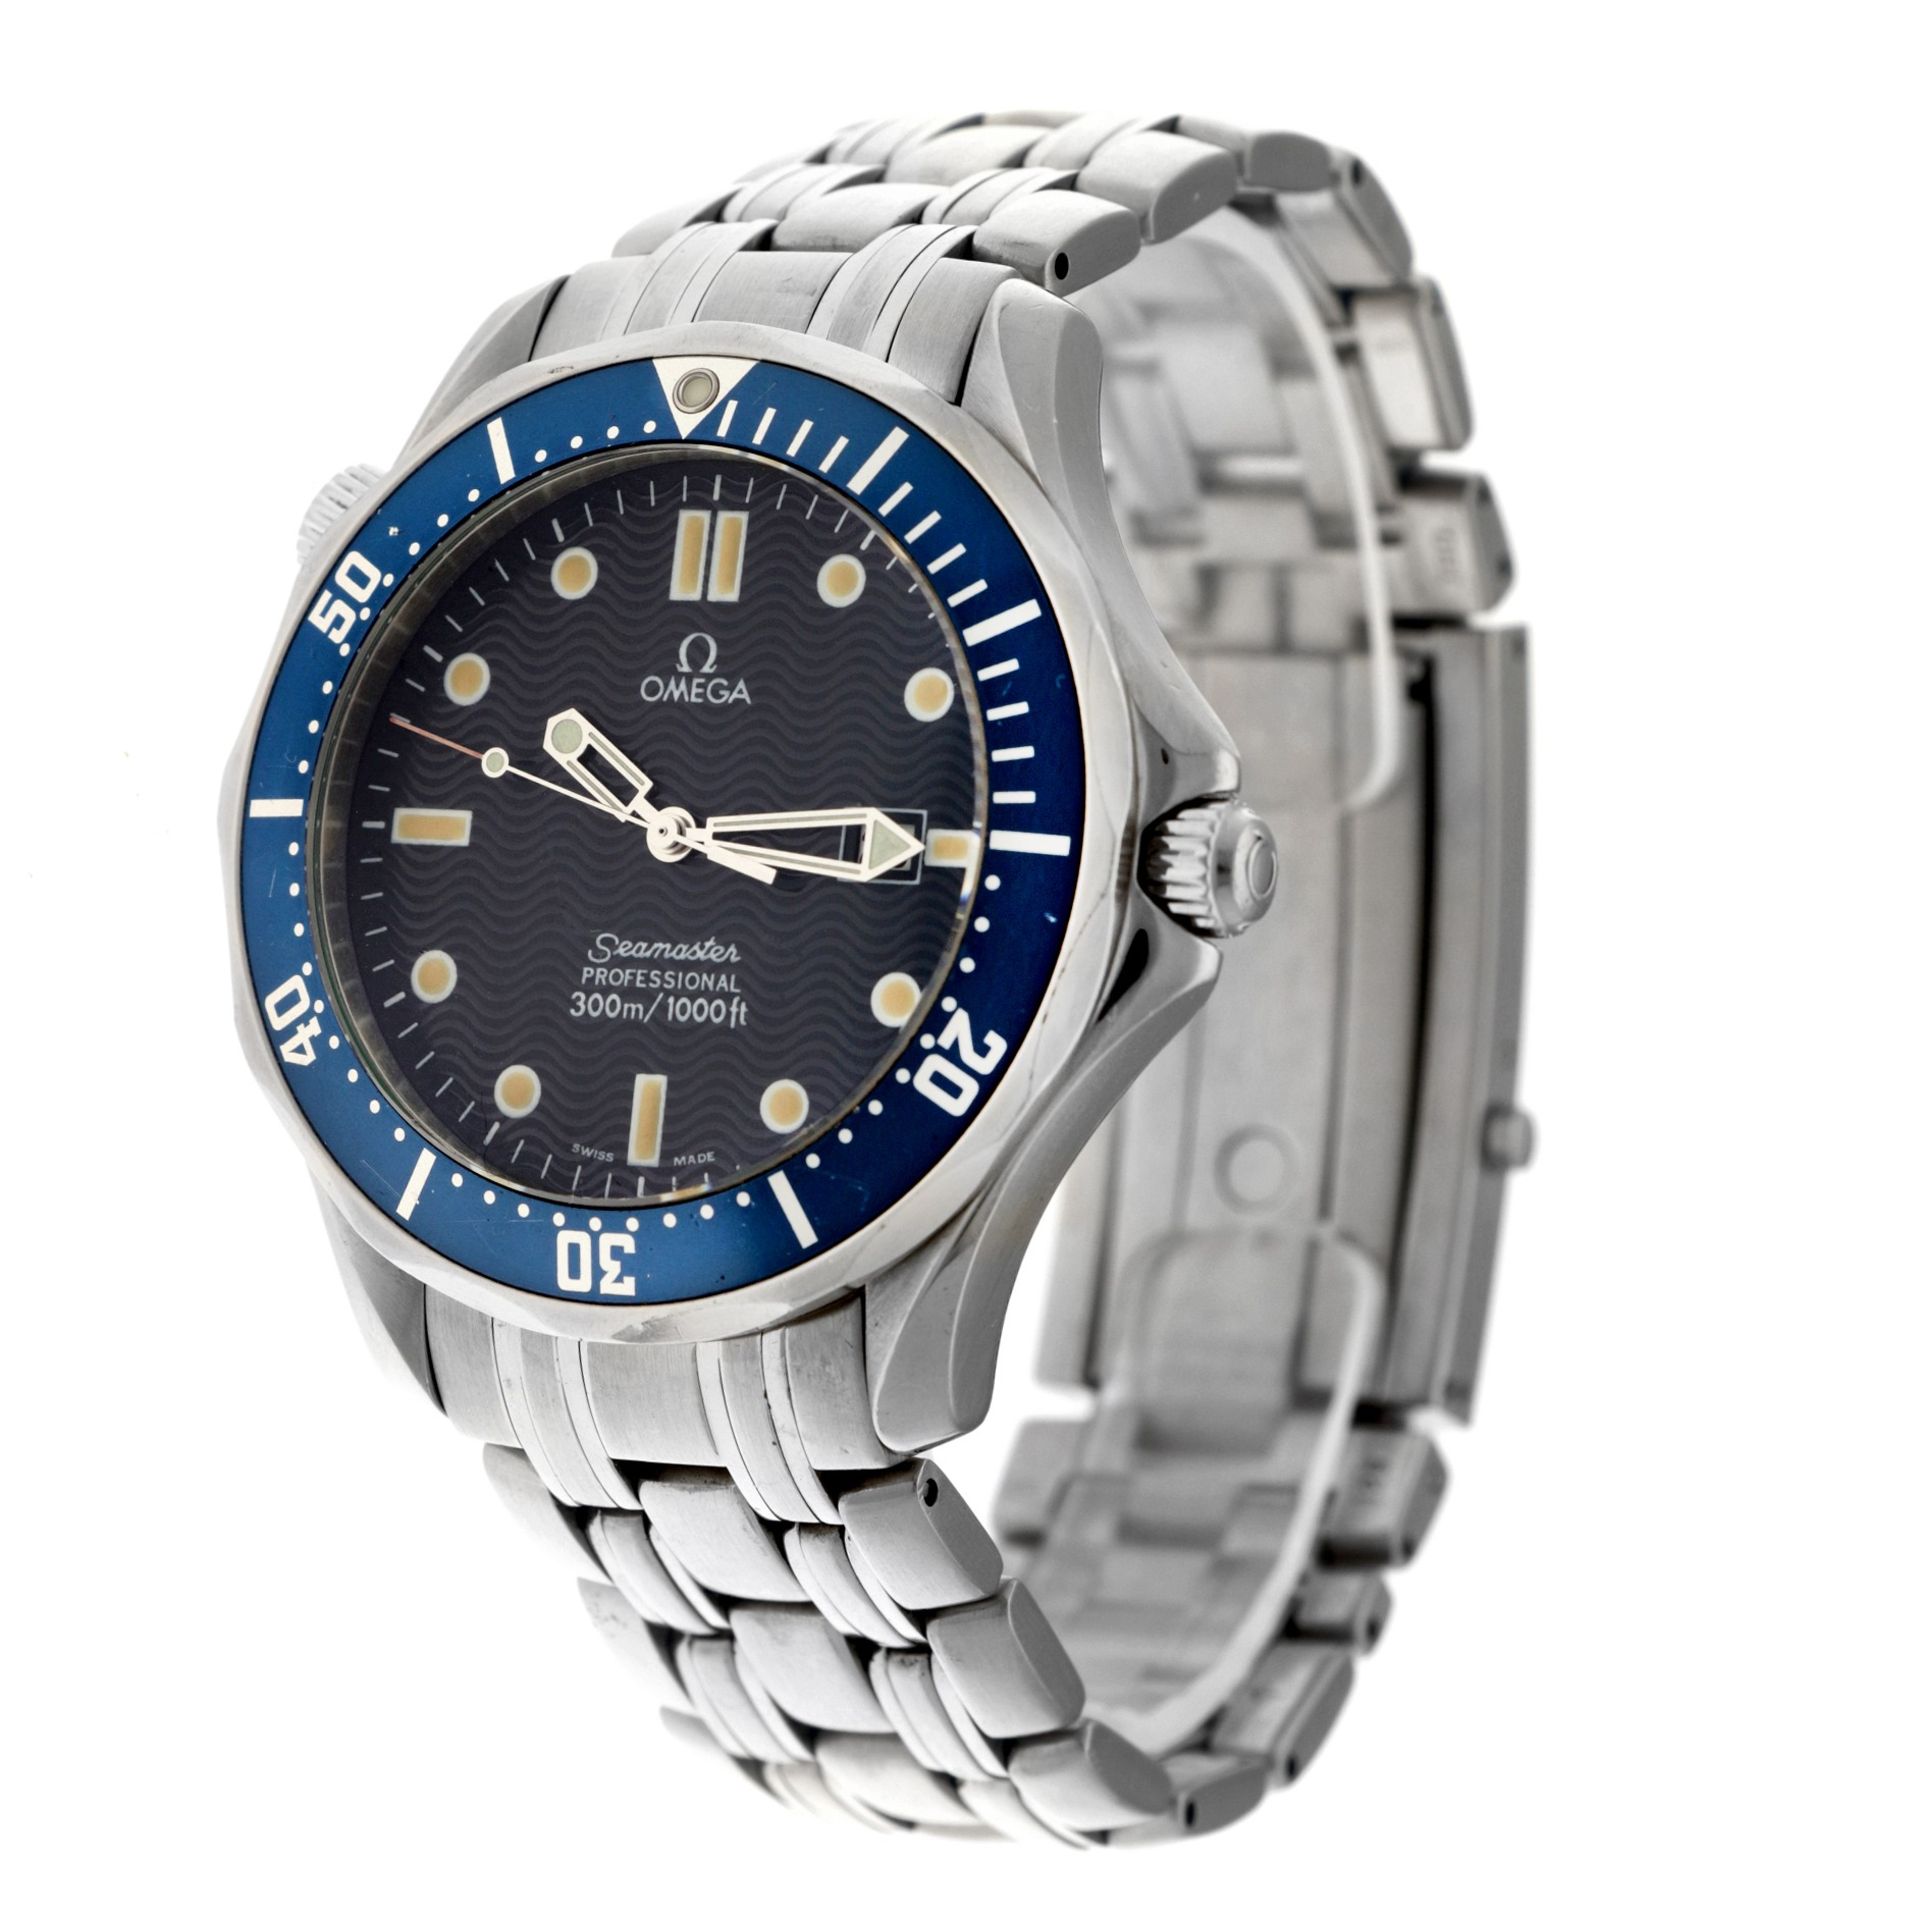 No Reserve - Omega Seamaster Professional 300m 25418000 - Men's watch - approx. 1995. - Bild 2 aus 5